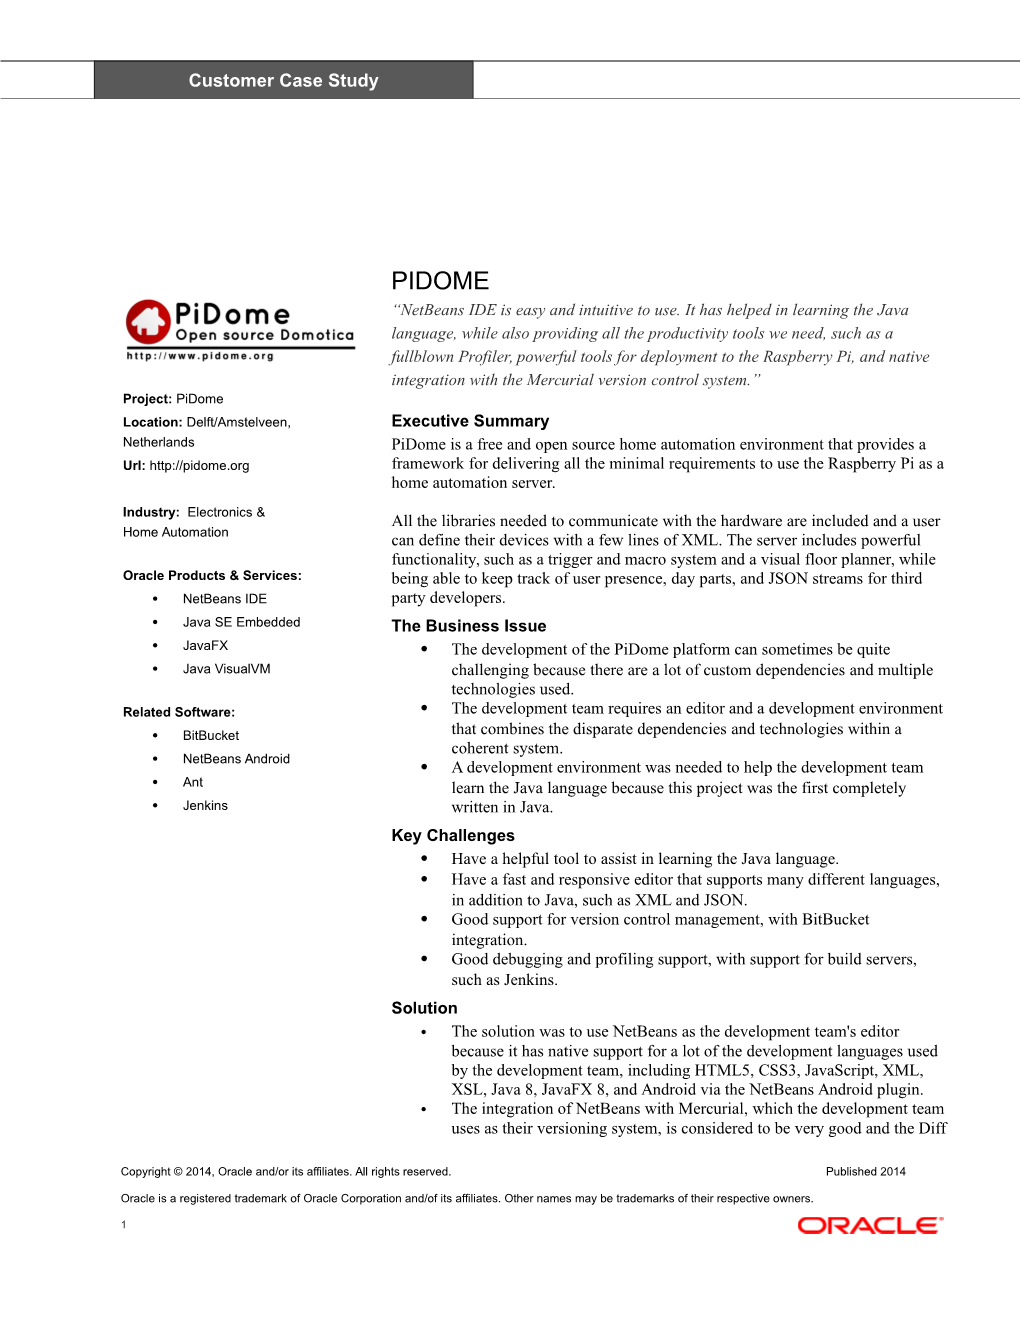 Customer Case Study (PDF)